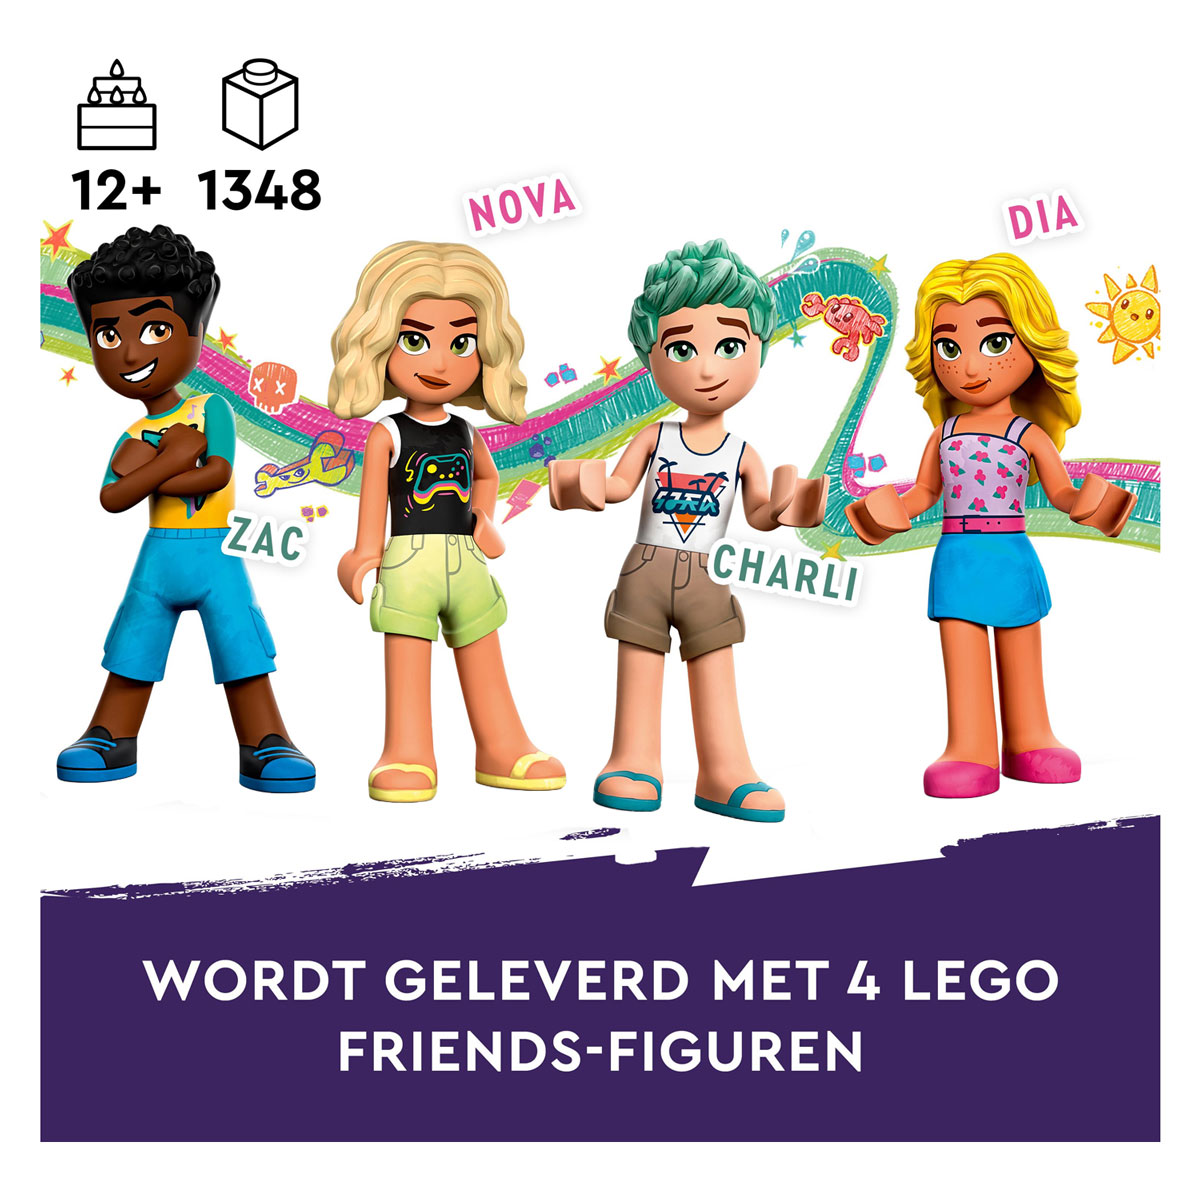 LEGO Friends 41737 Strandpretpark